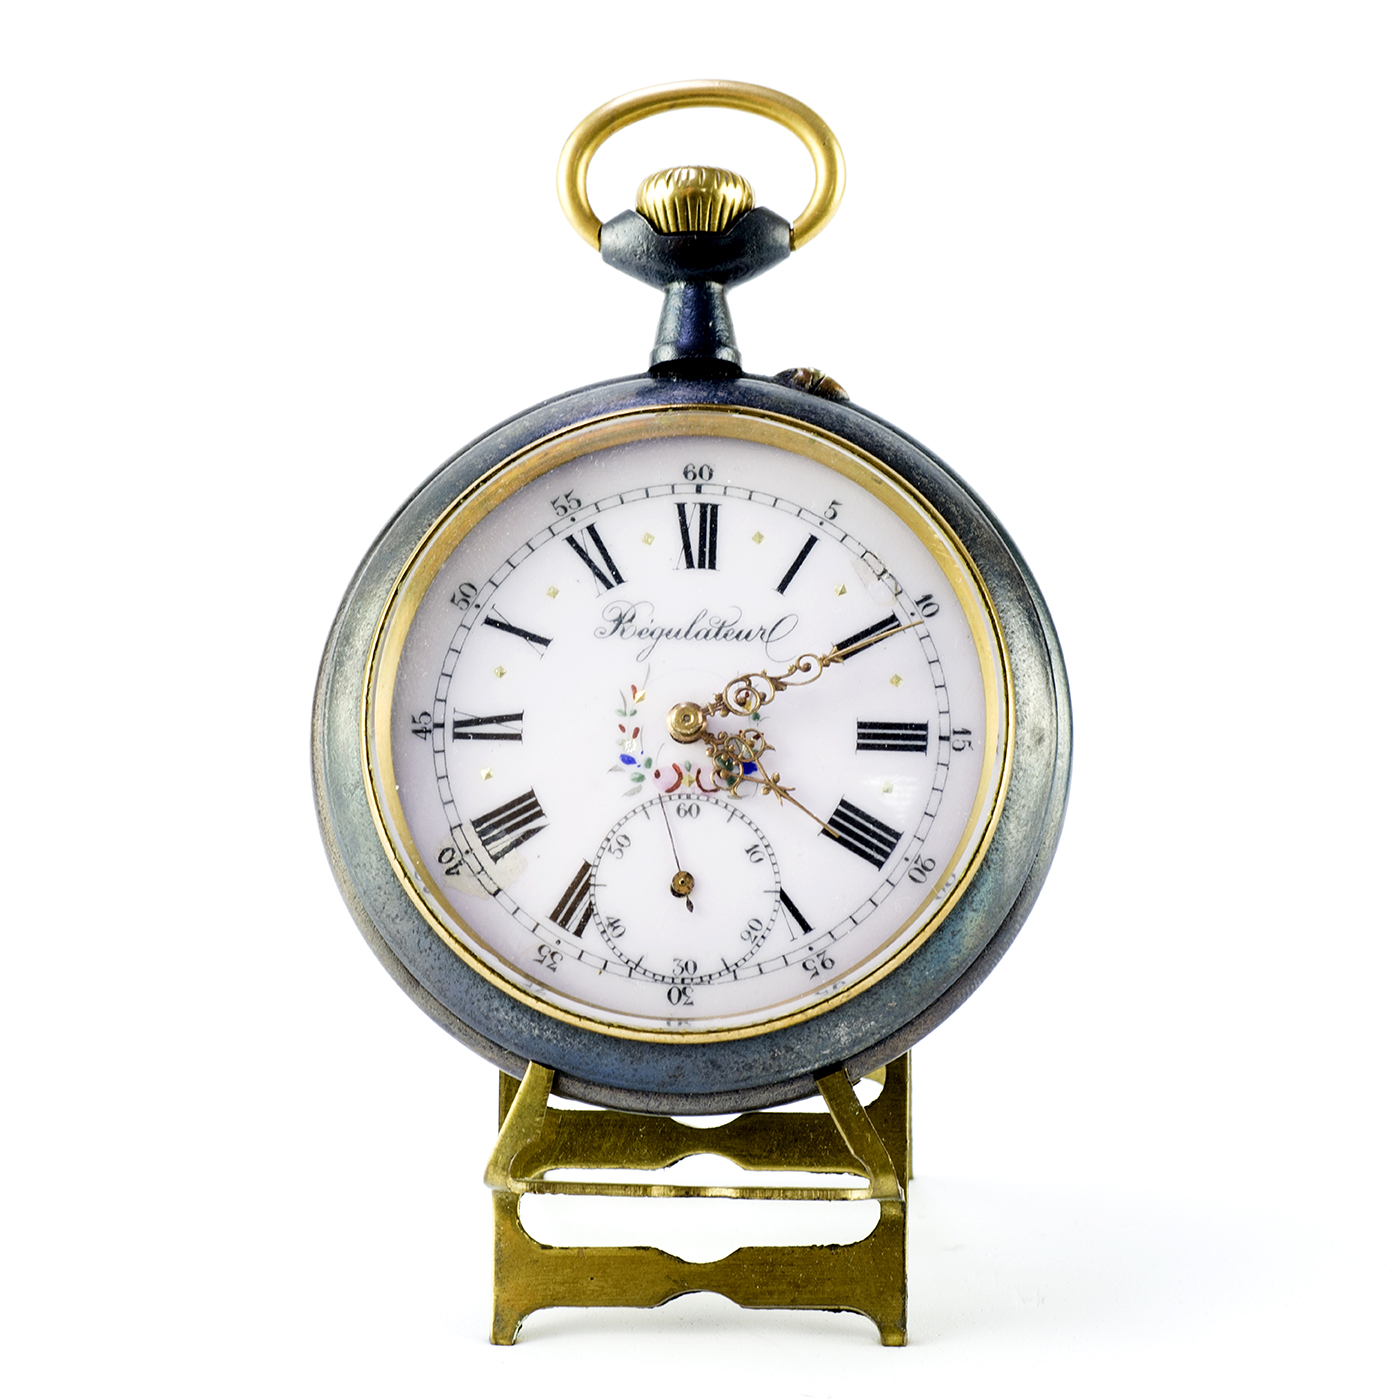 REGULATEUR. Reloj de Bolsillo, lepine y remontoir. Suiza, ca. 1900